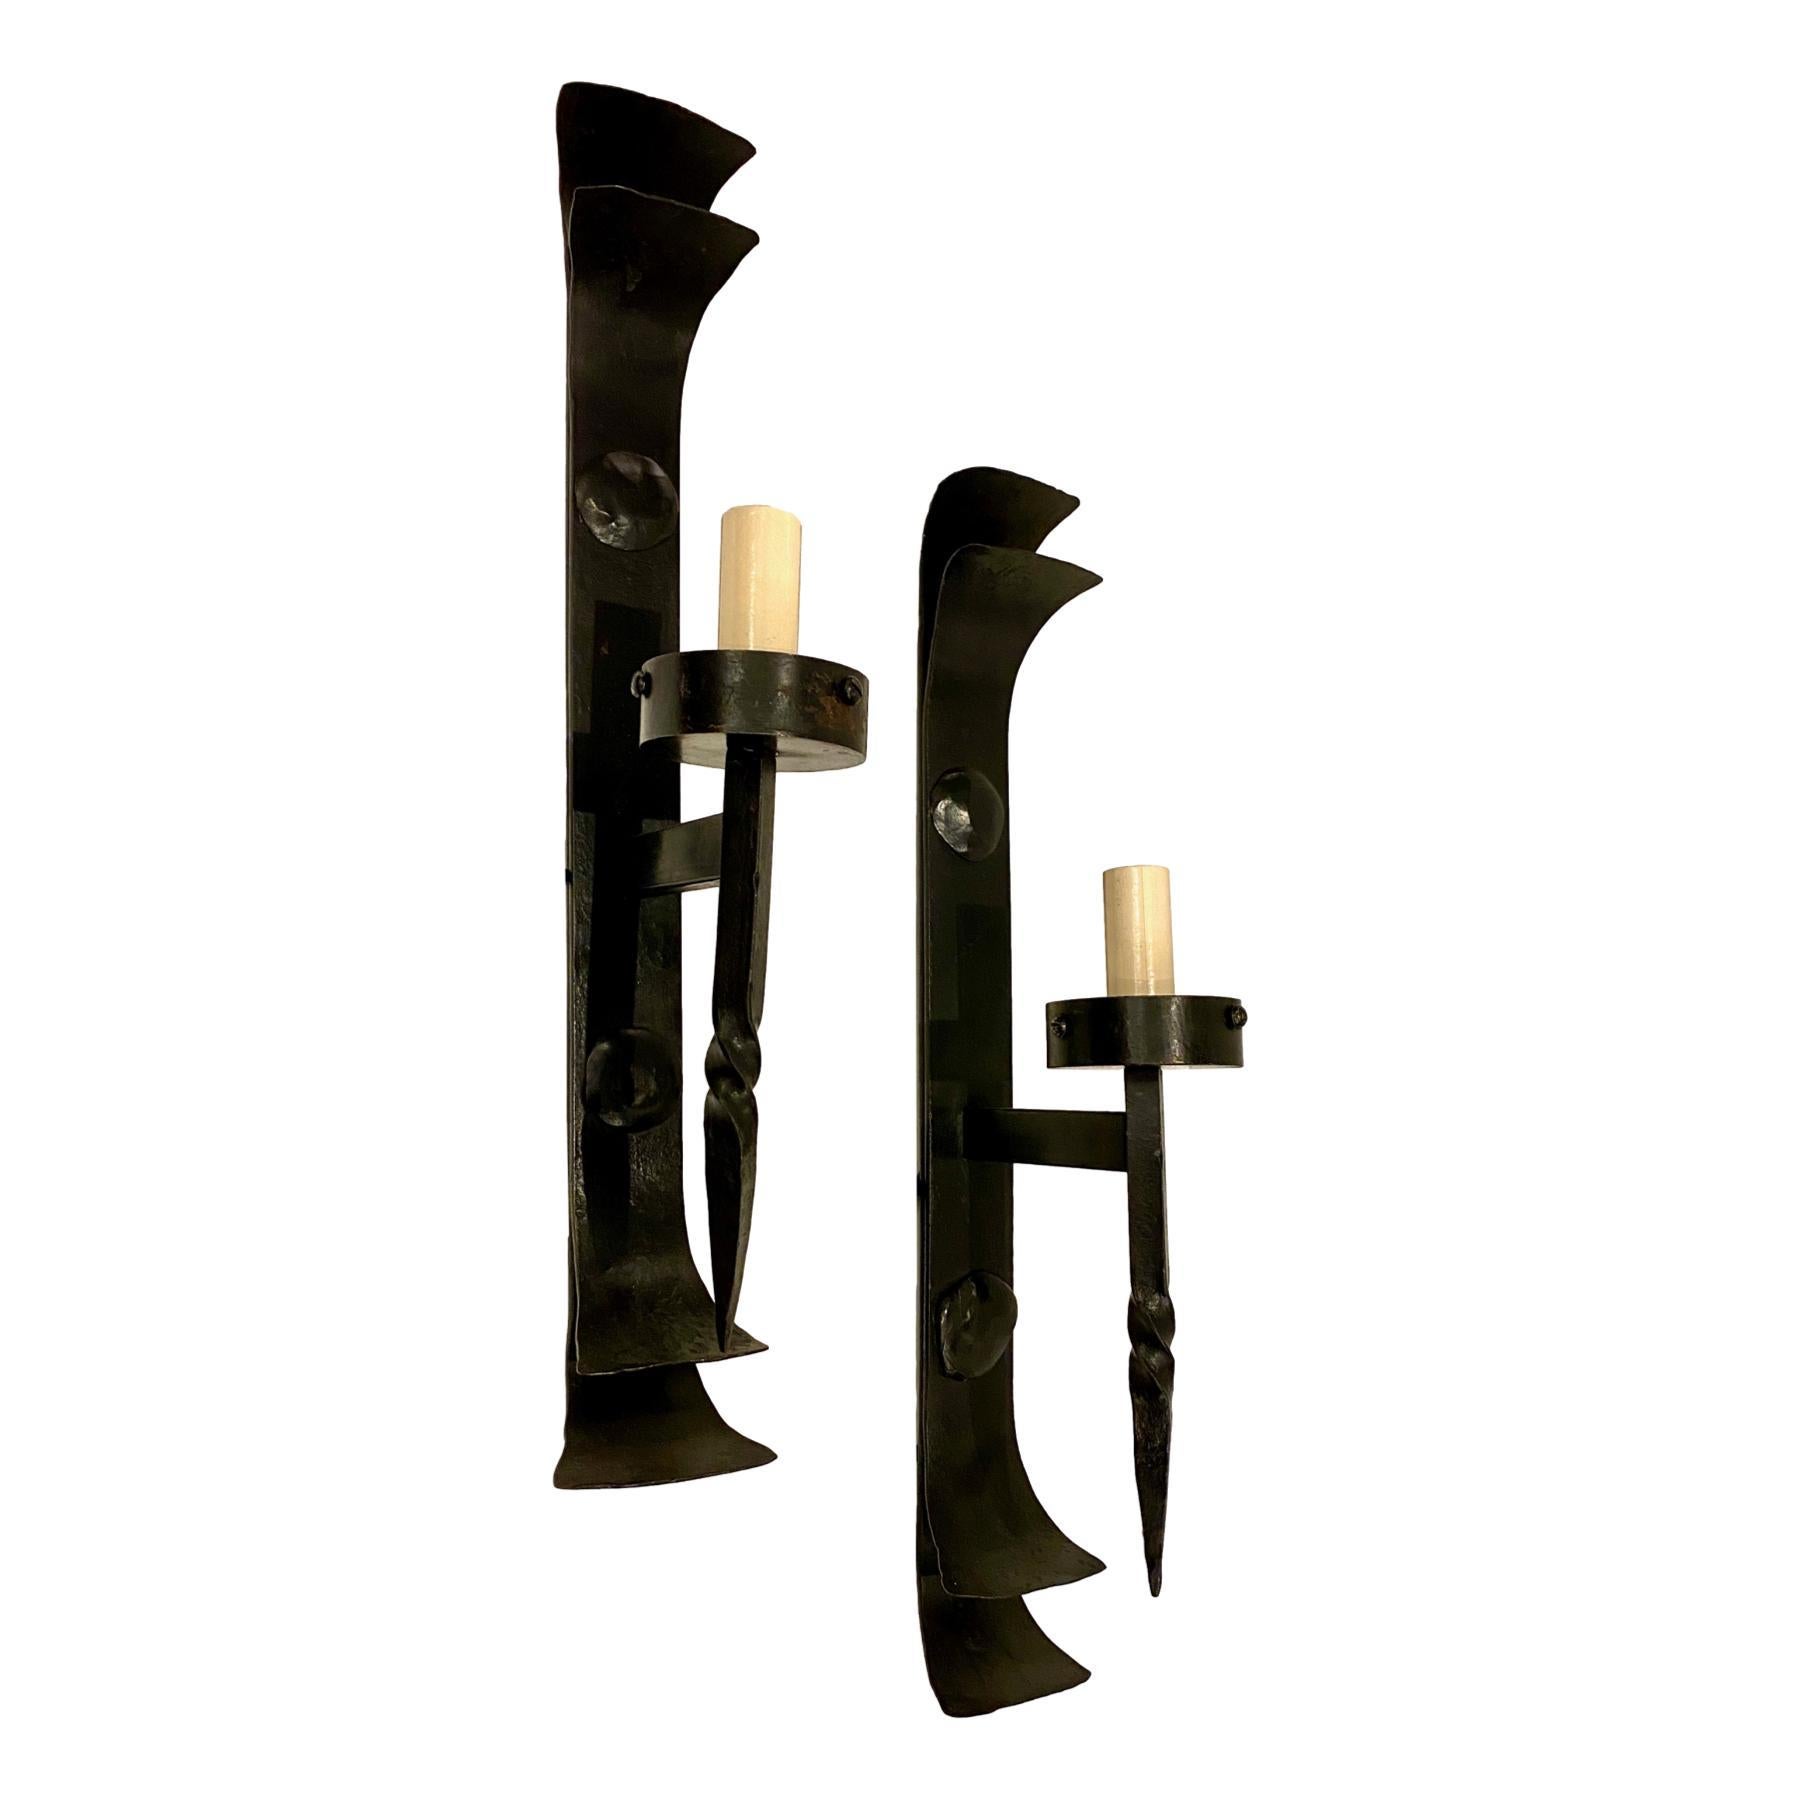 Set of 4 Italian circa 1950's single-light wrought iron sconces. Sold per pair.

Measurements:
Height:18